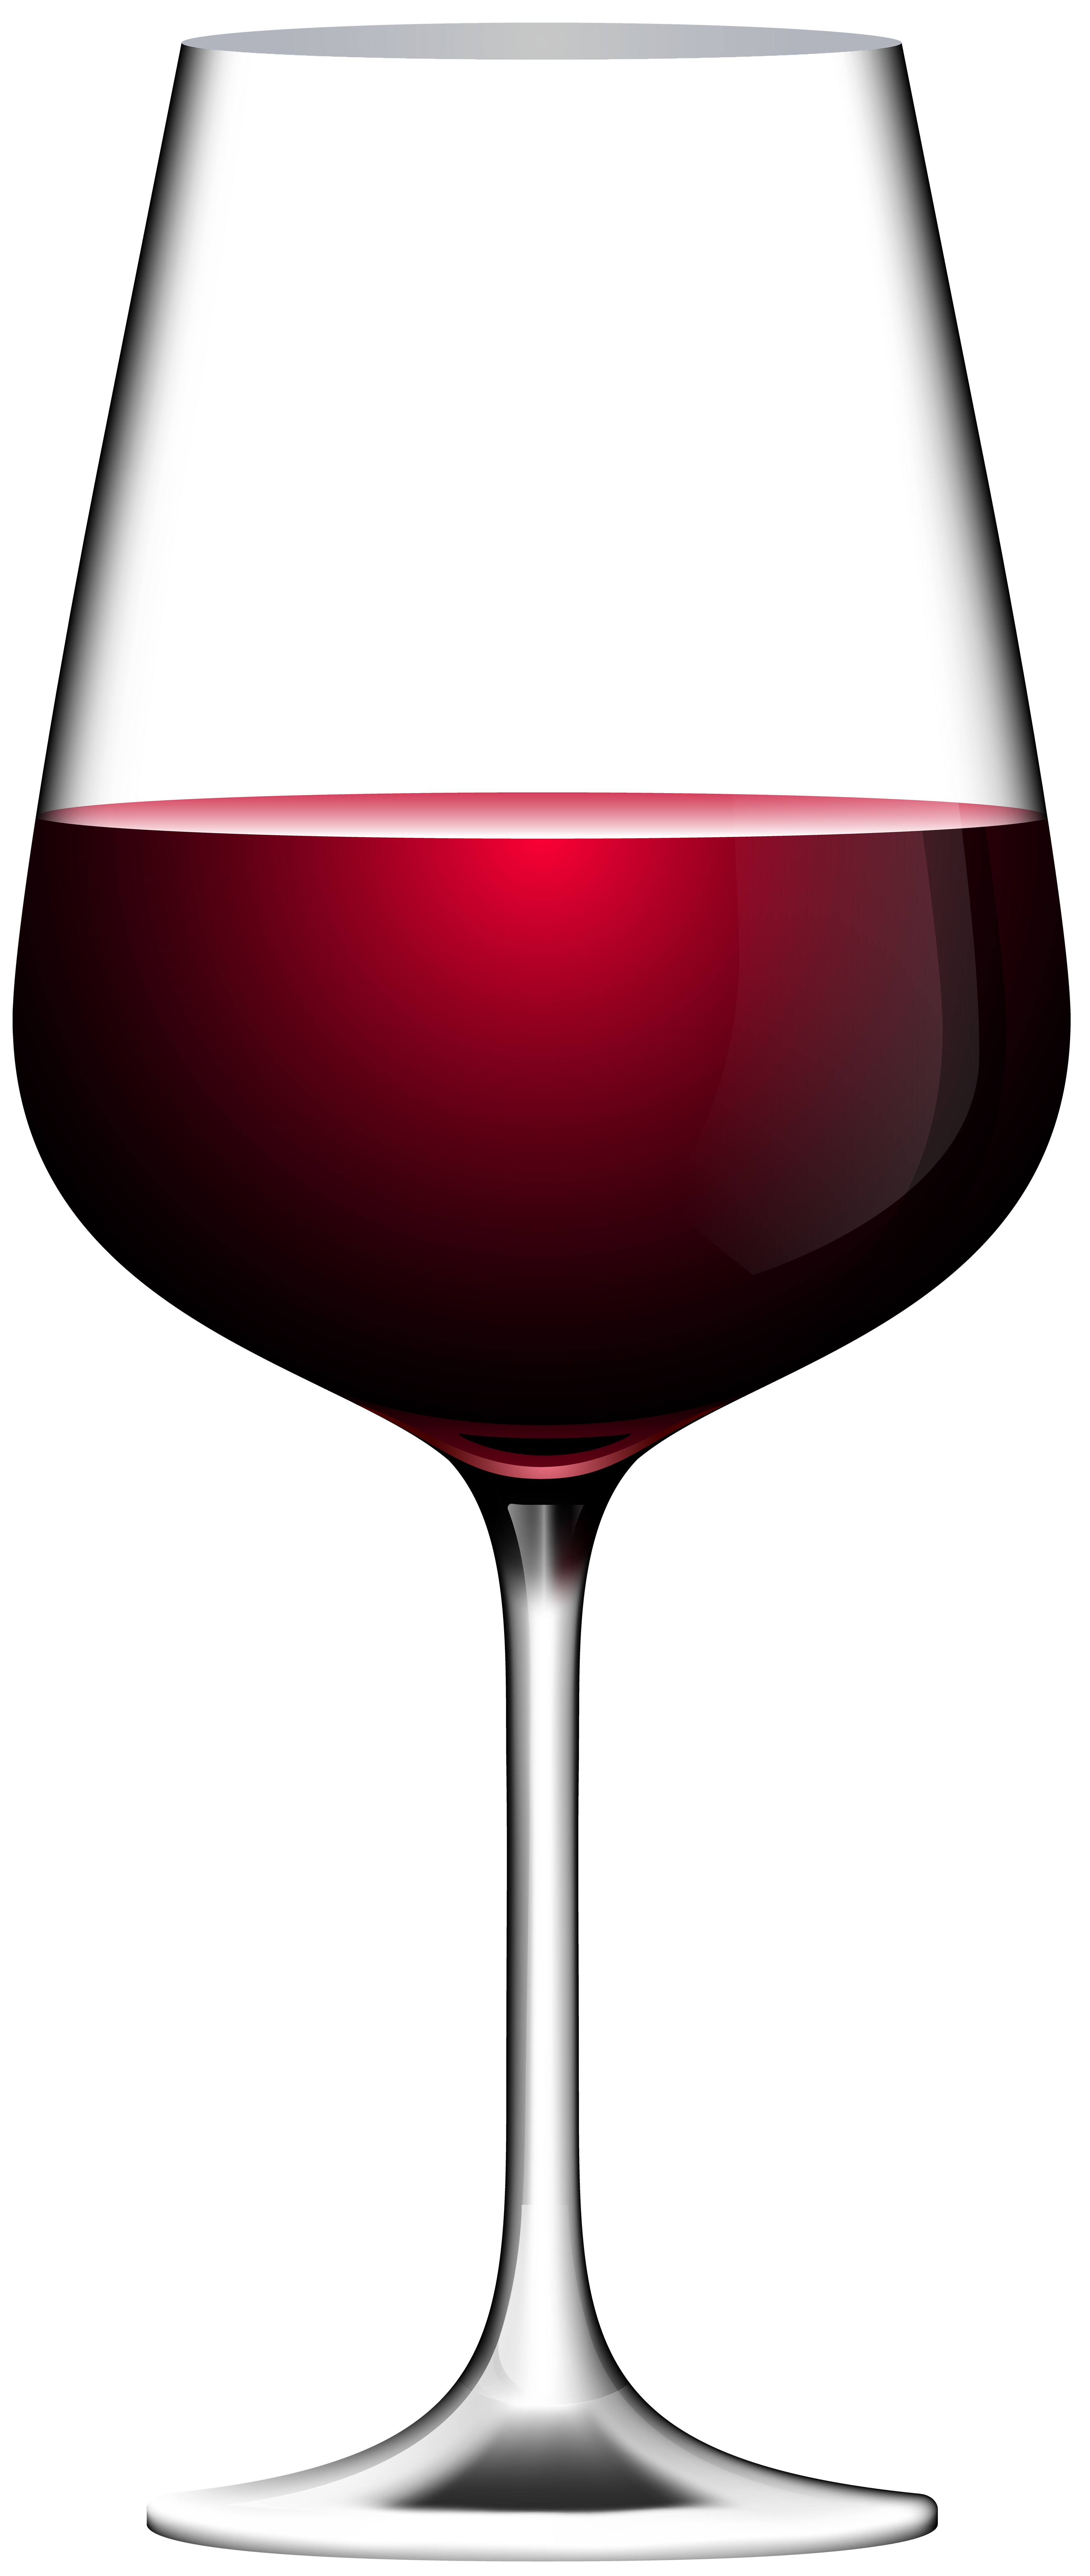 red wine glass clip art